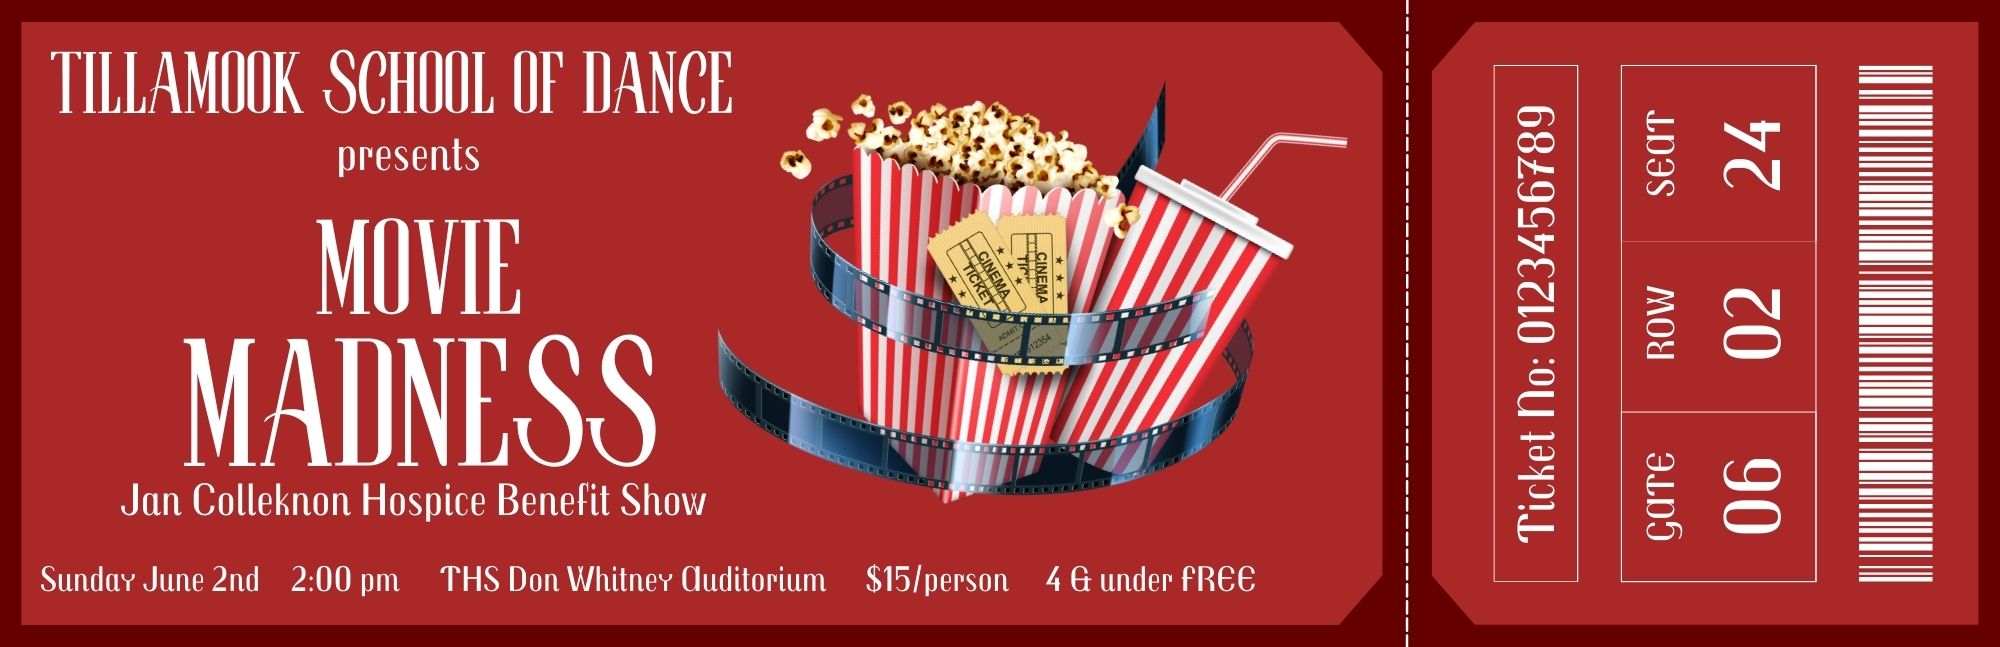 Red and Black Modern Cinema Movie Ticket L9qit8.tmp